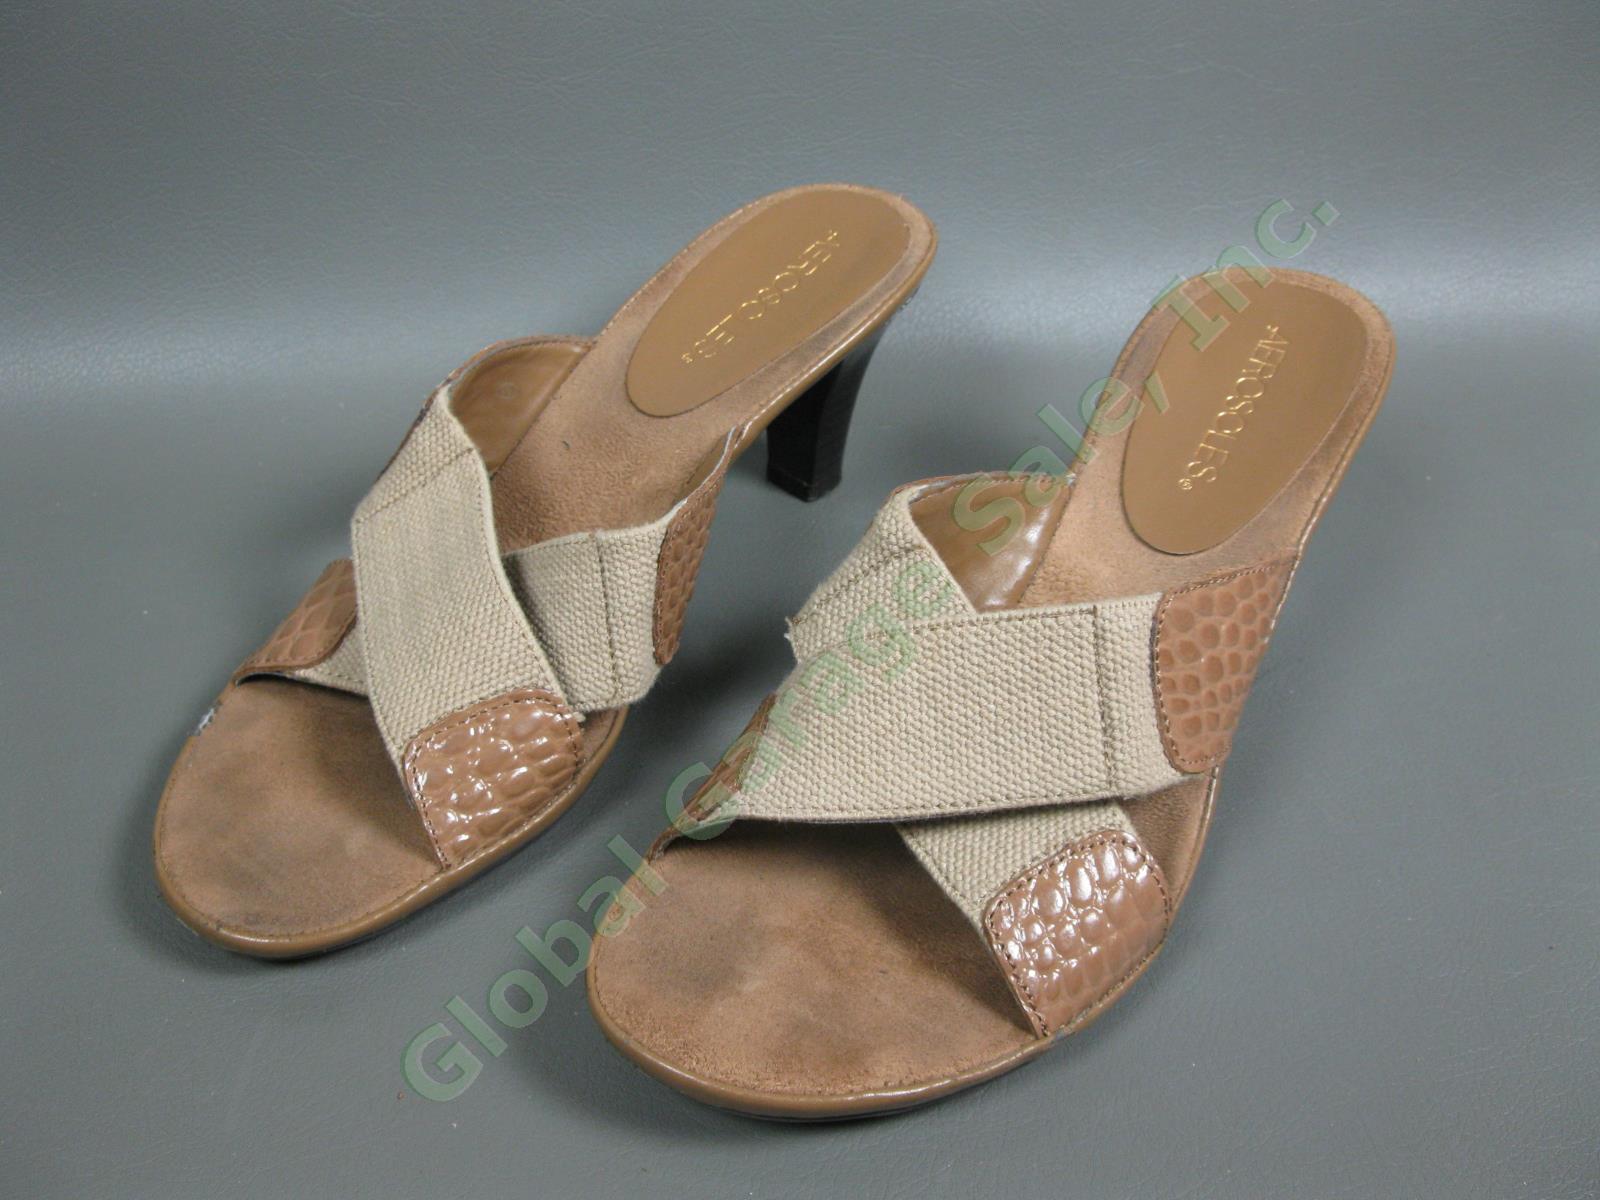 7 Pair Womens Leather Canvas Summer Sandal High Heel Size 6-10 Dress Shoe Lot 3